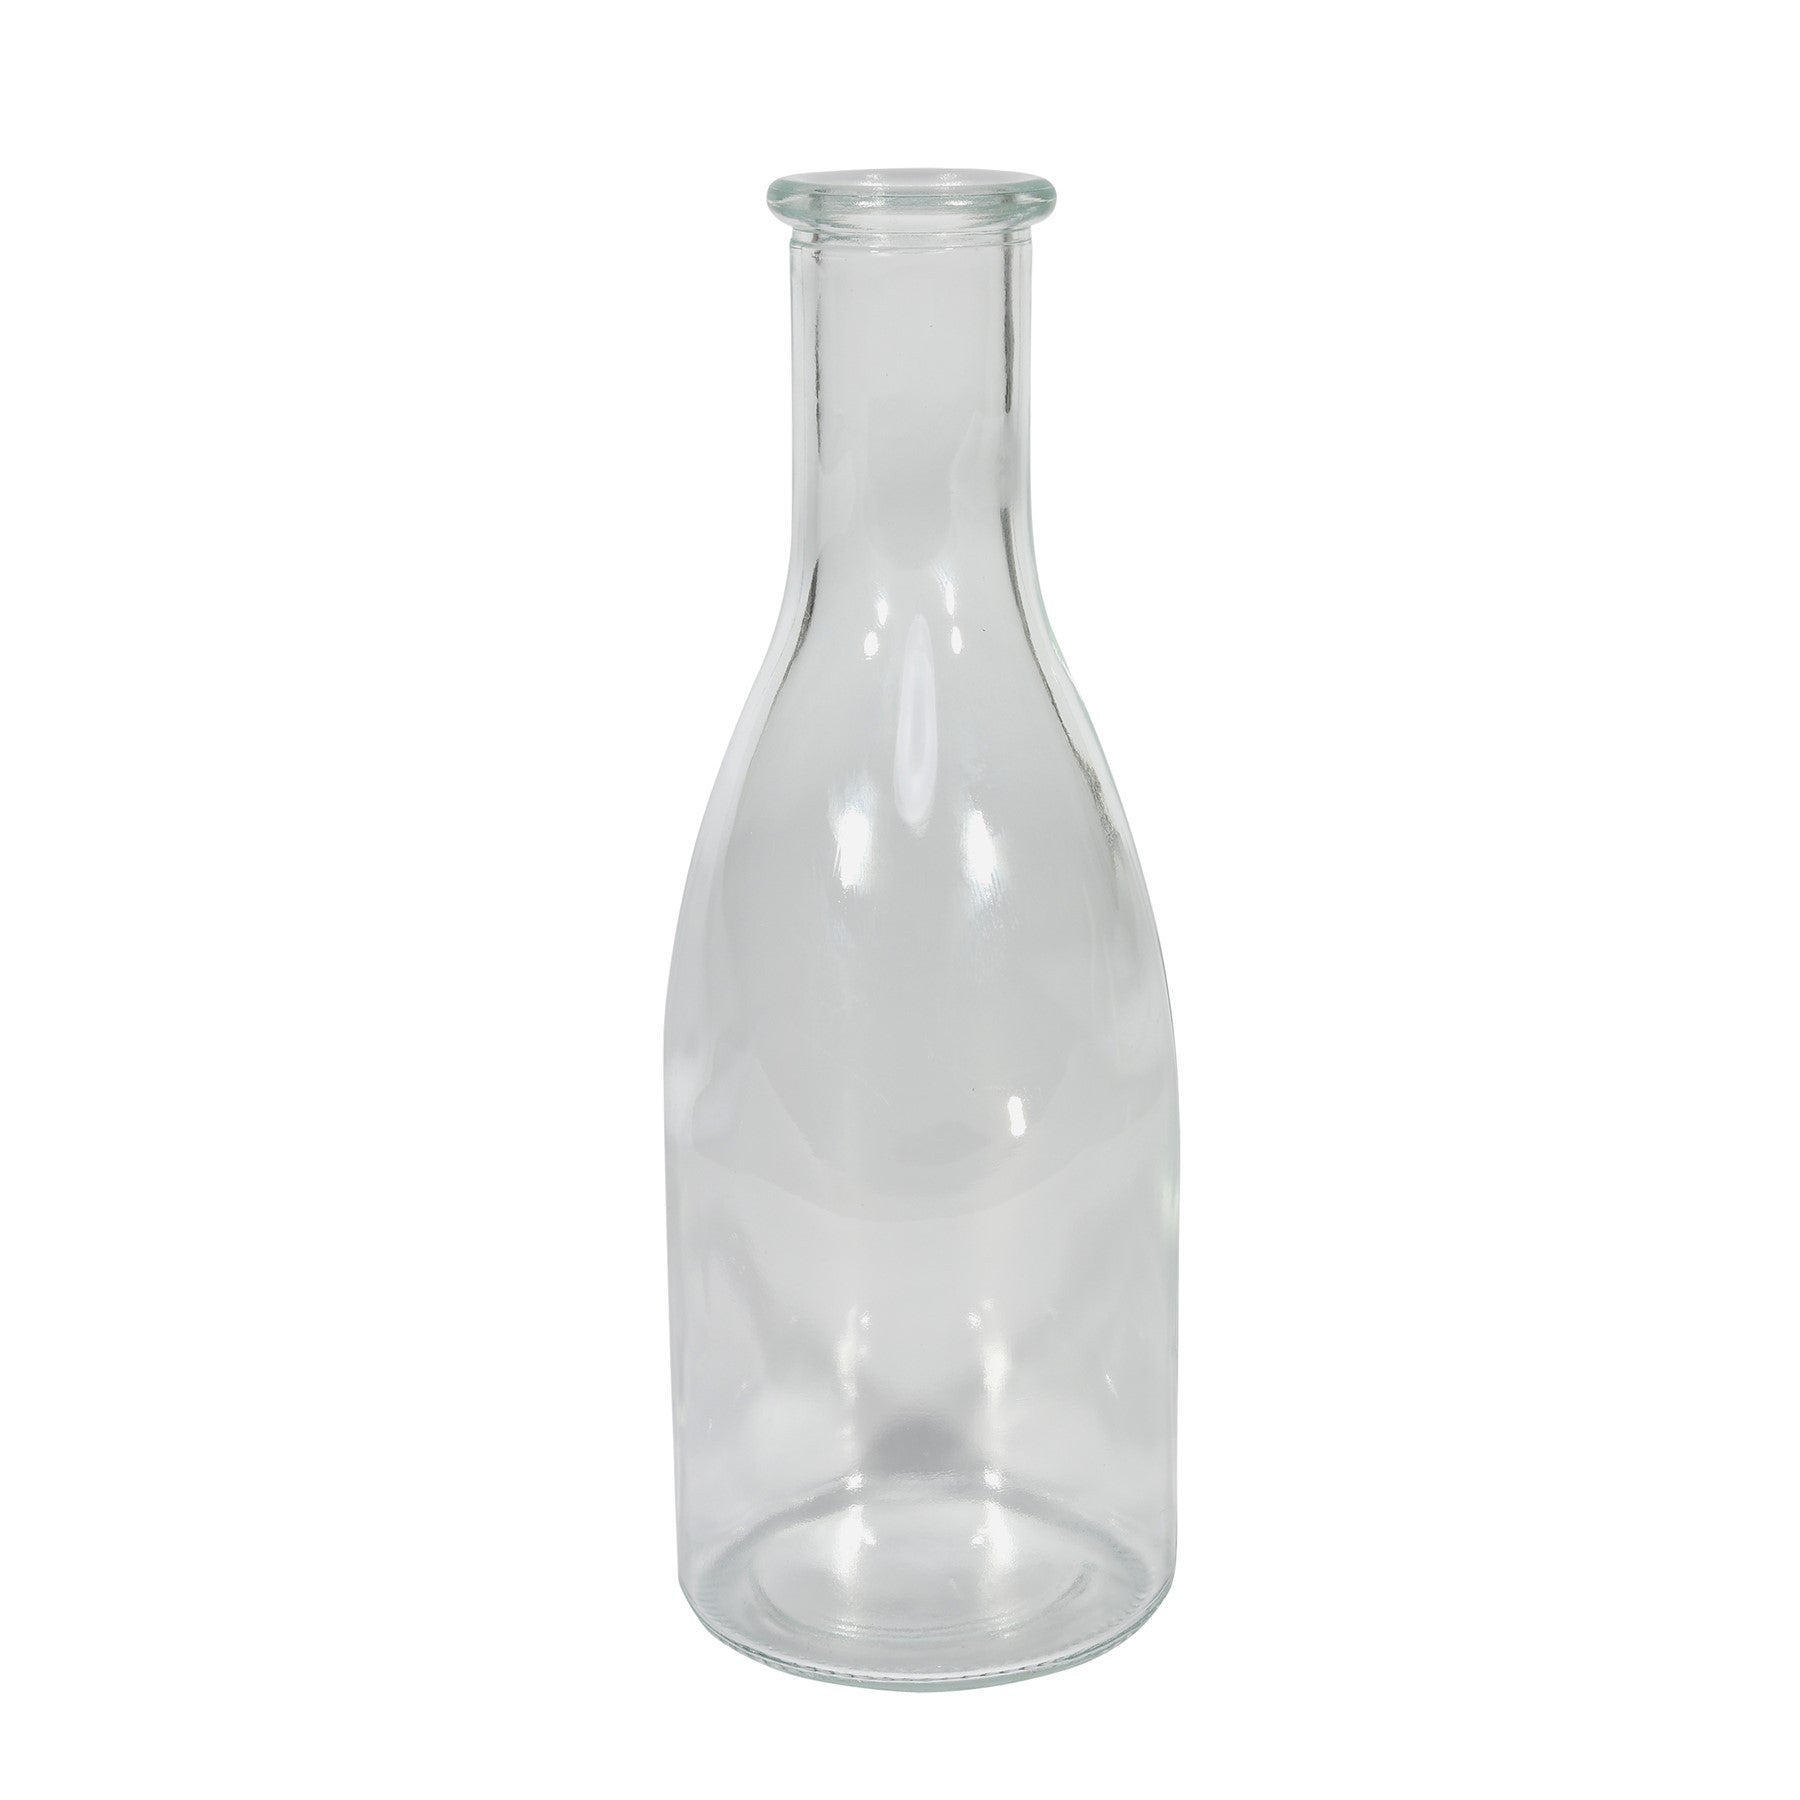 View Caribou Glass Bottle 185cm x 65cm information